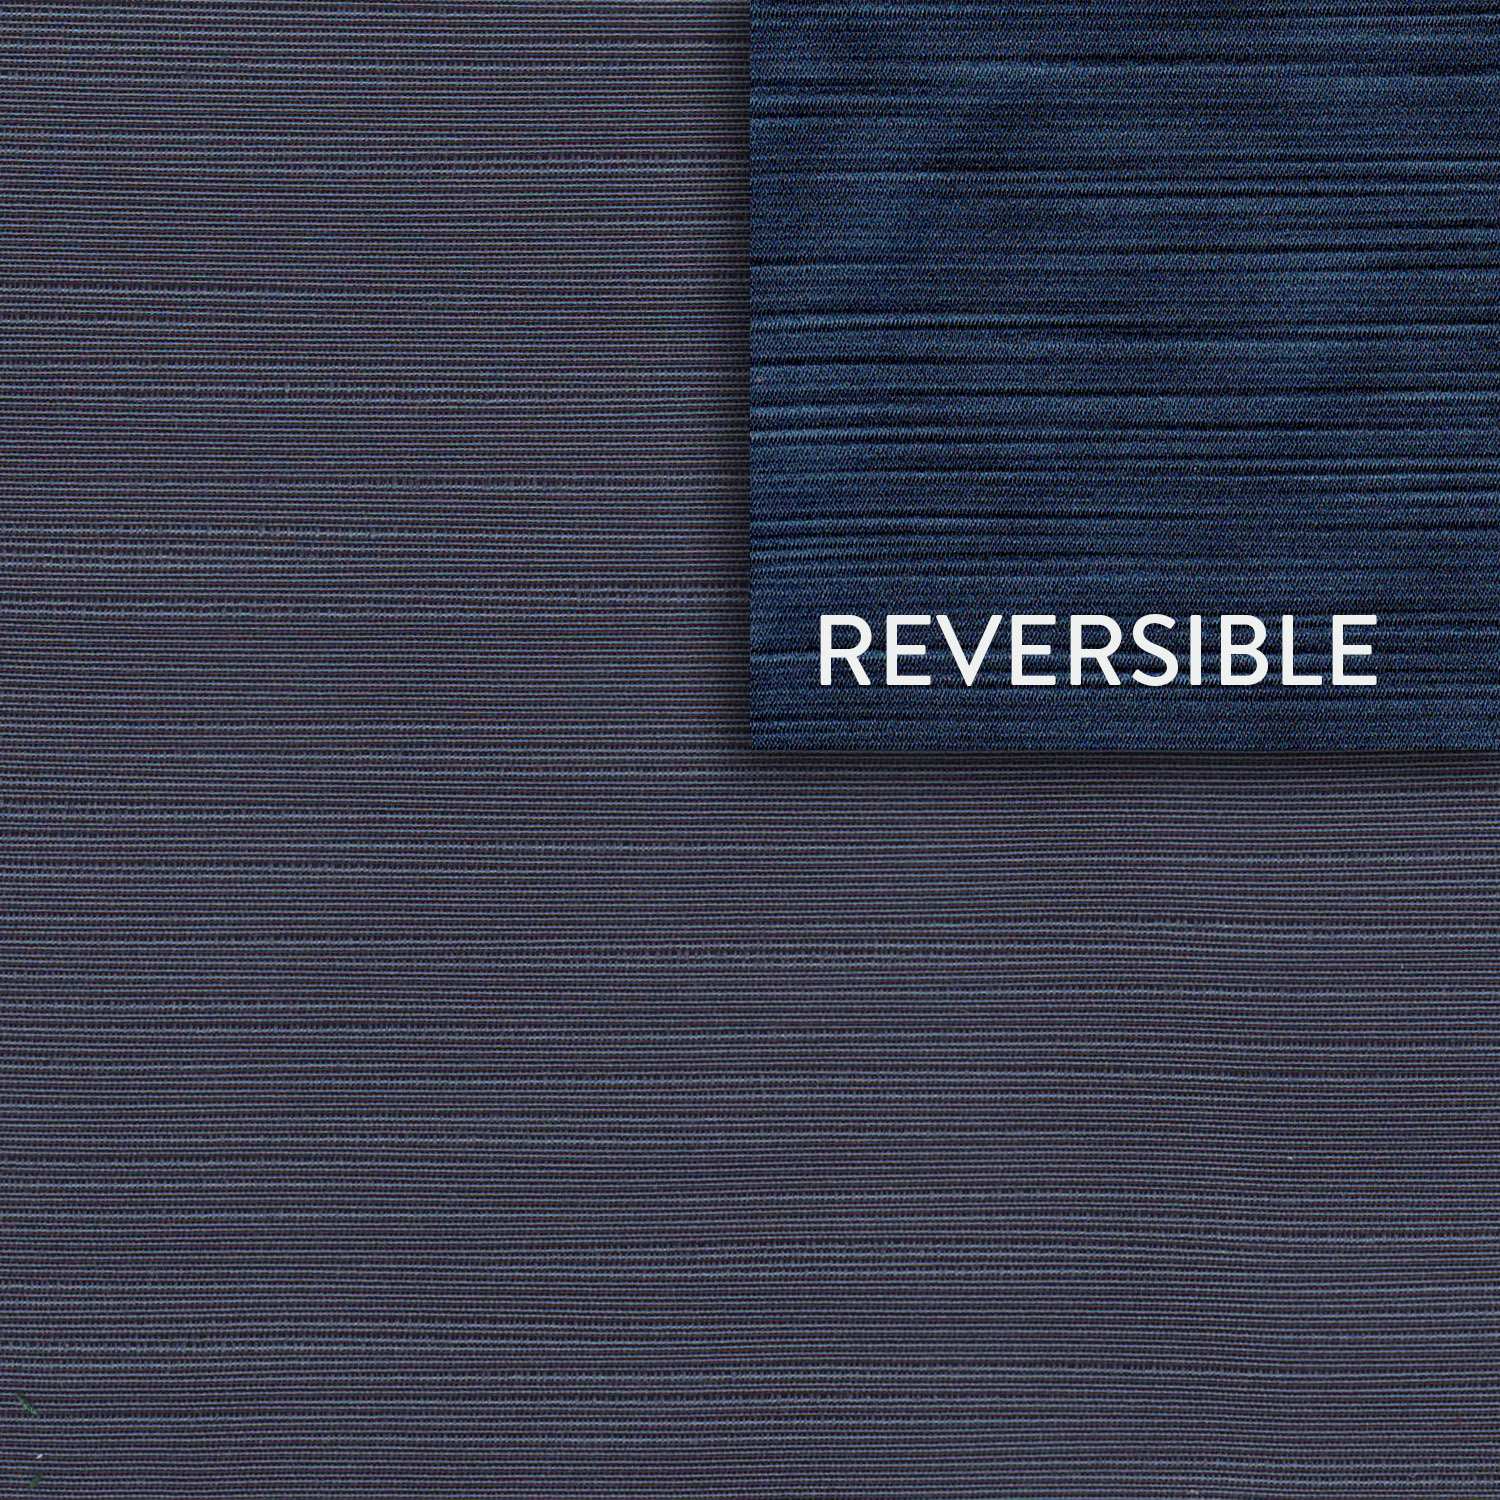 E-REVER/ROYAL - Multi Purpose Fabric Suitable For Drapery